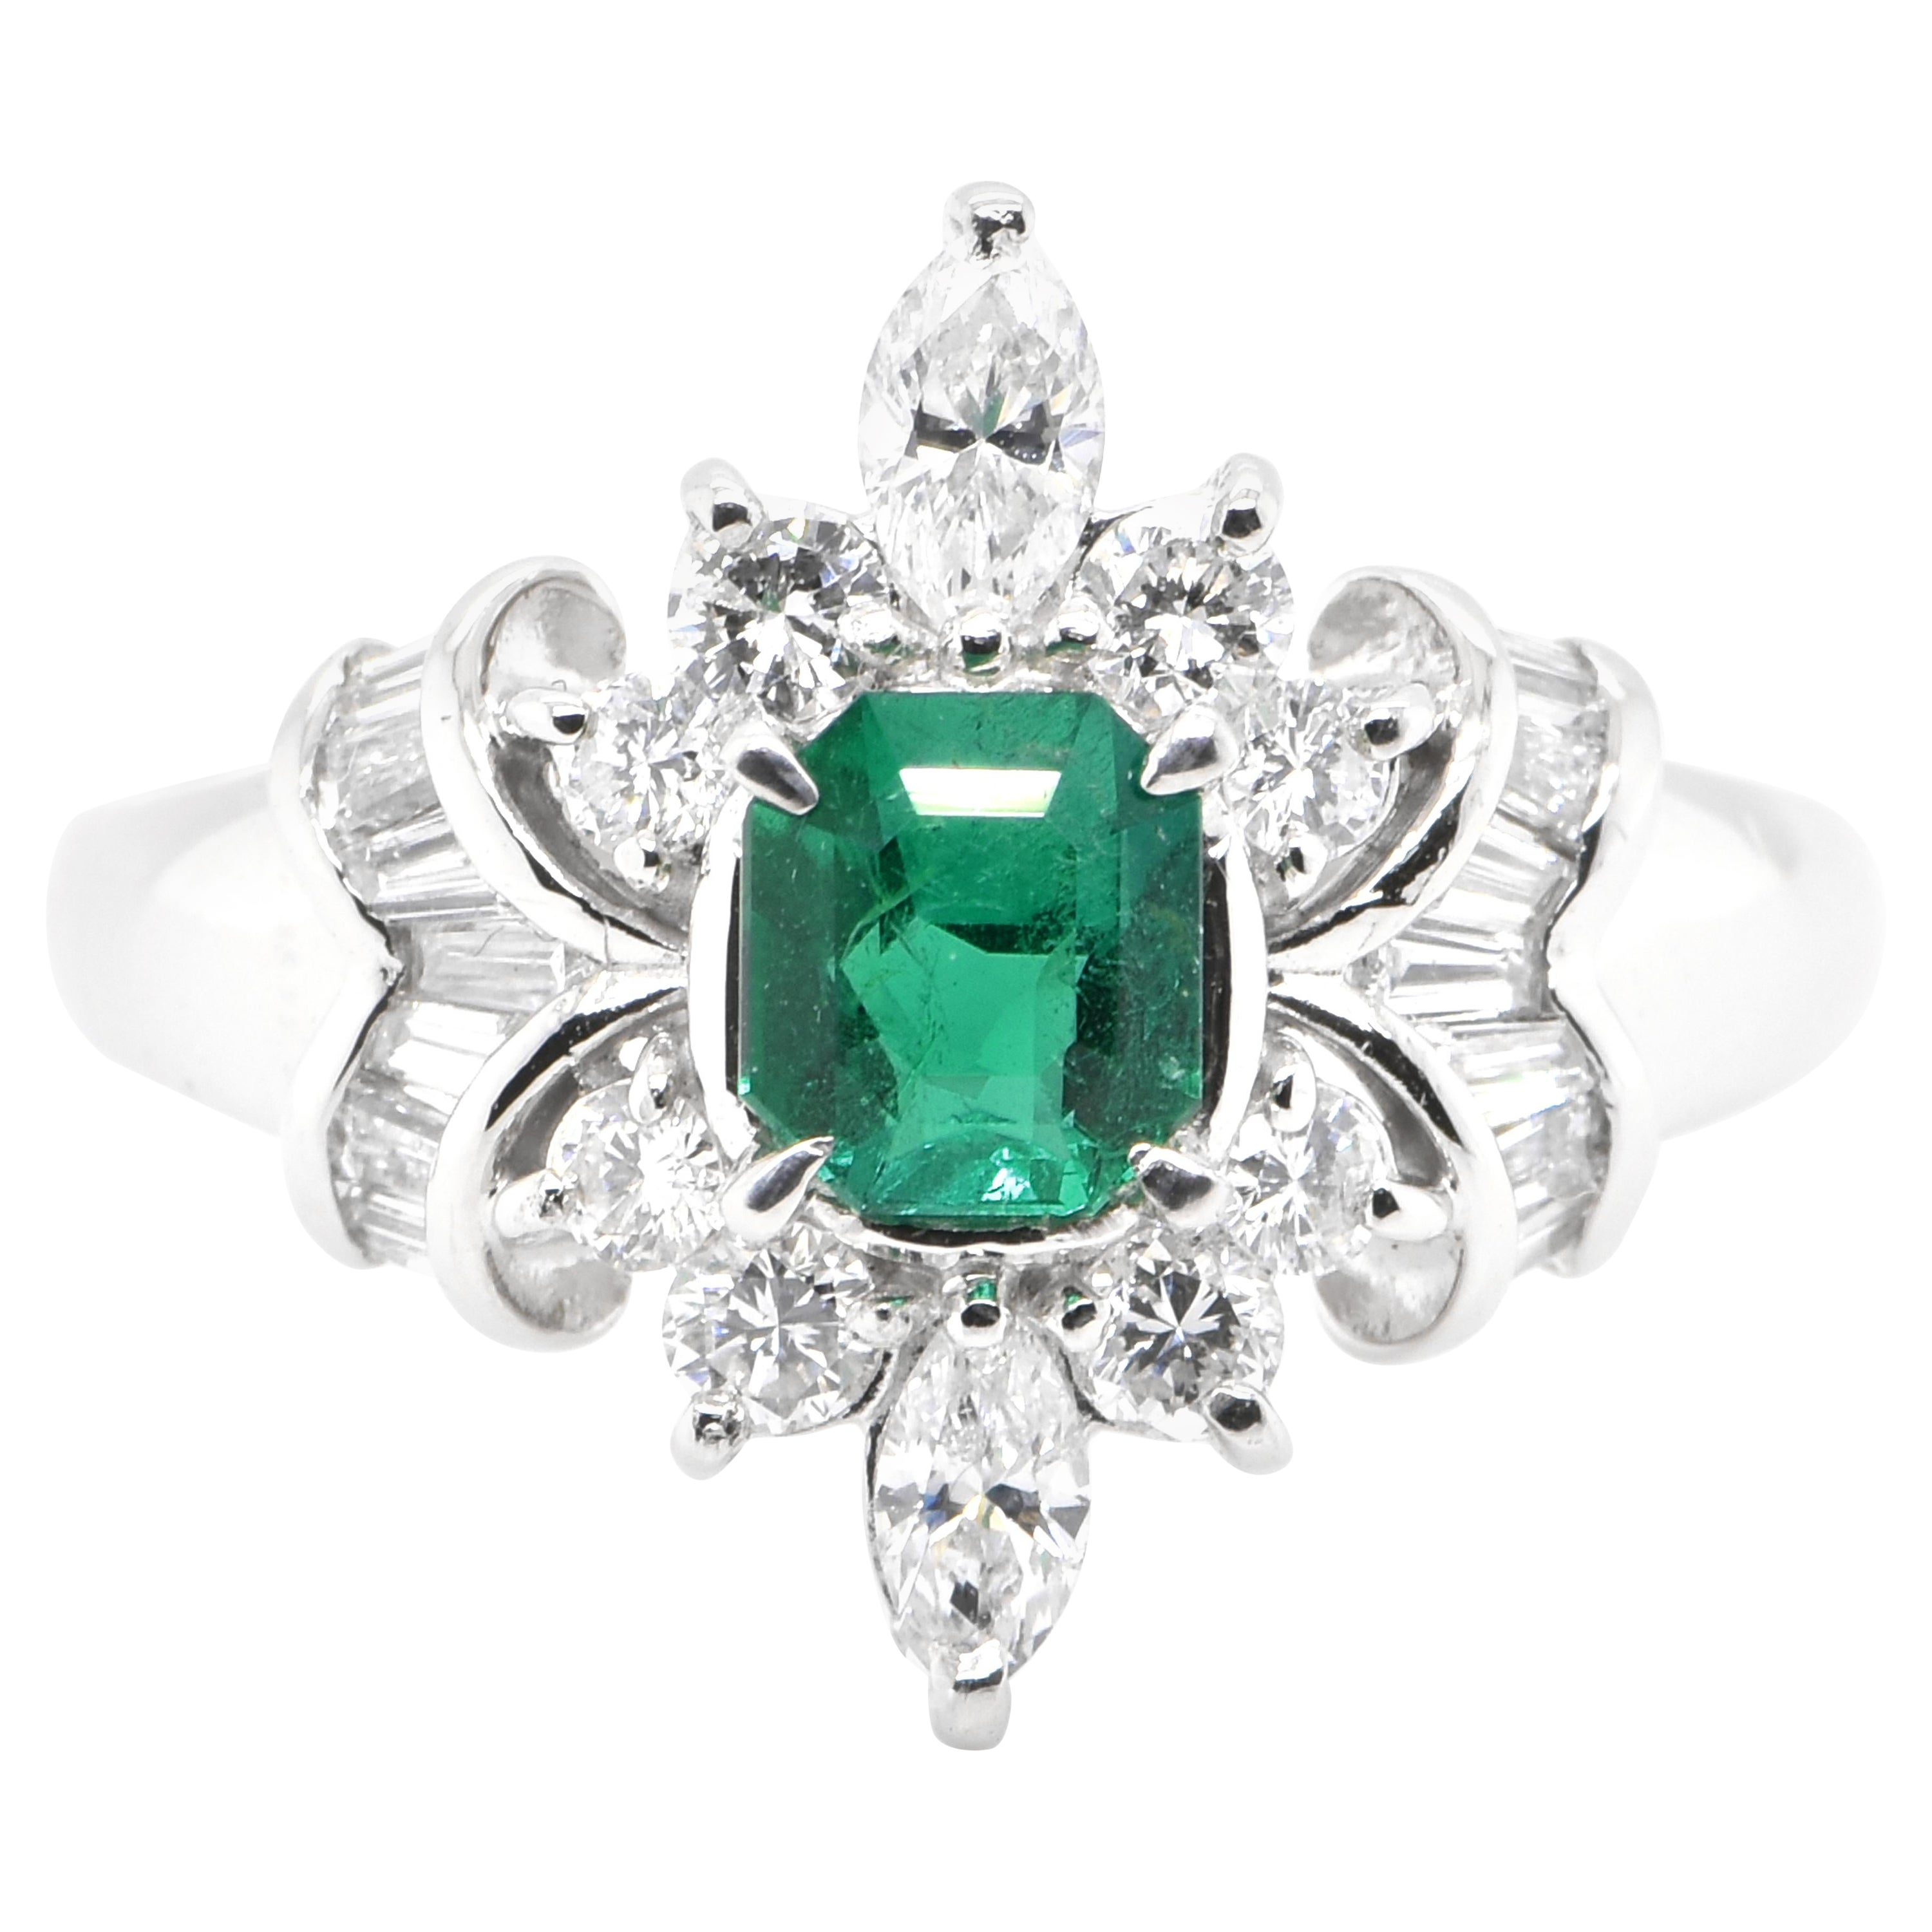 0.52 Carat Natural Emerald and Diamond Ring Set in Platinum